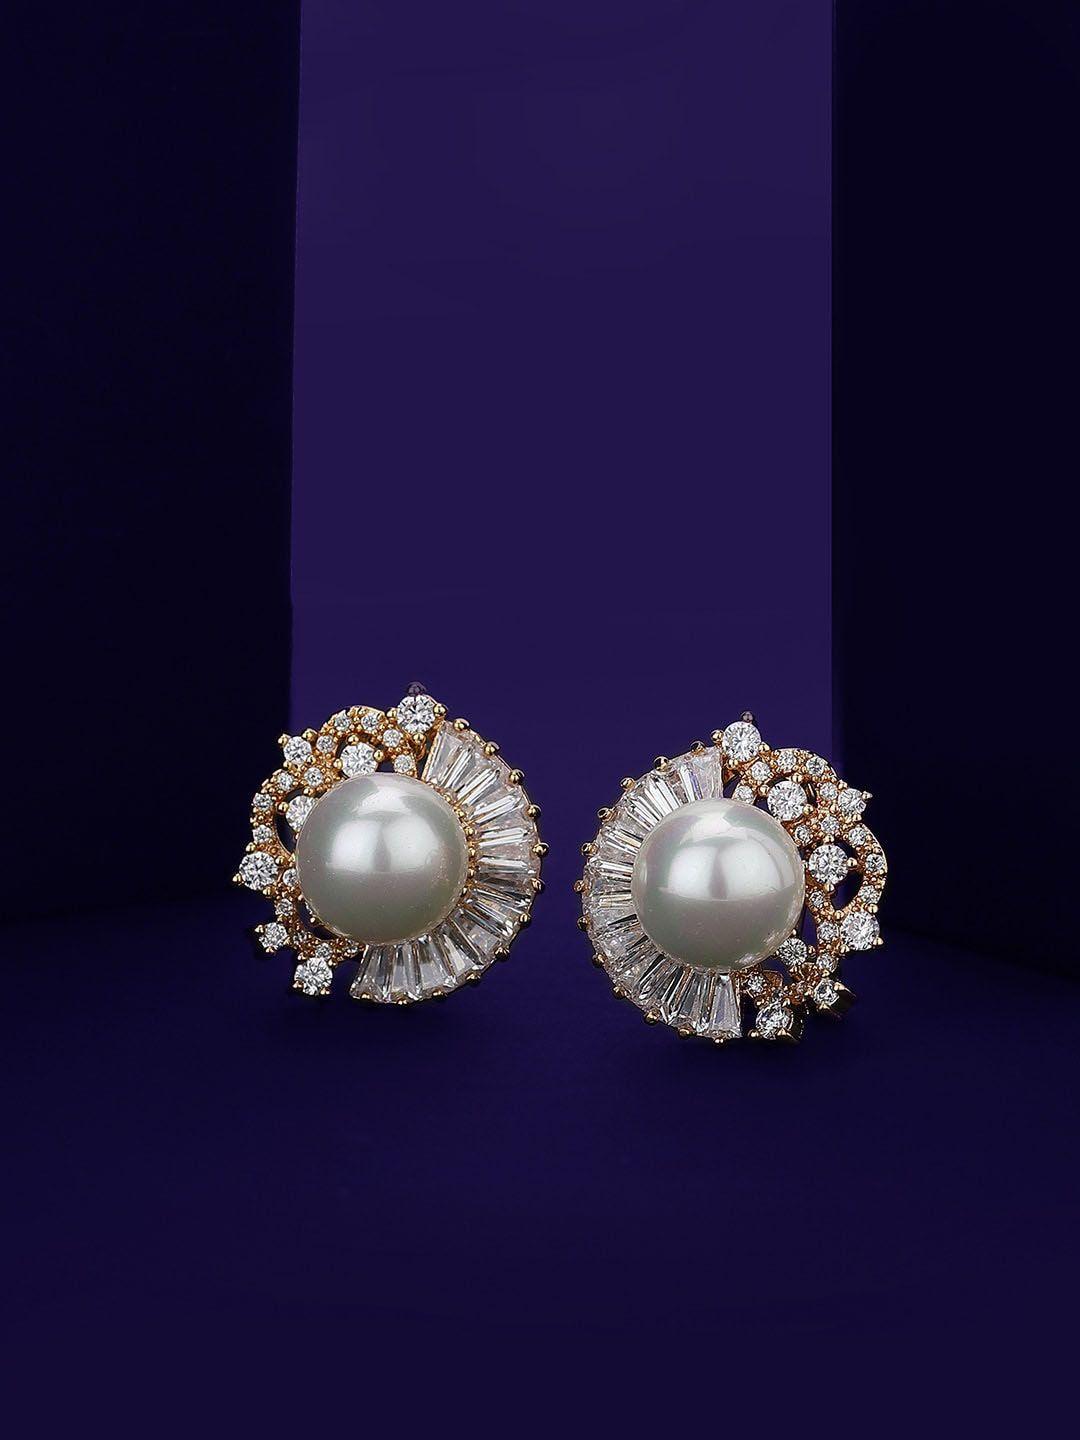 carlton london rose gold-plated circular studs earrings